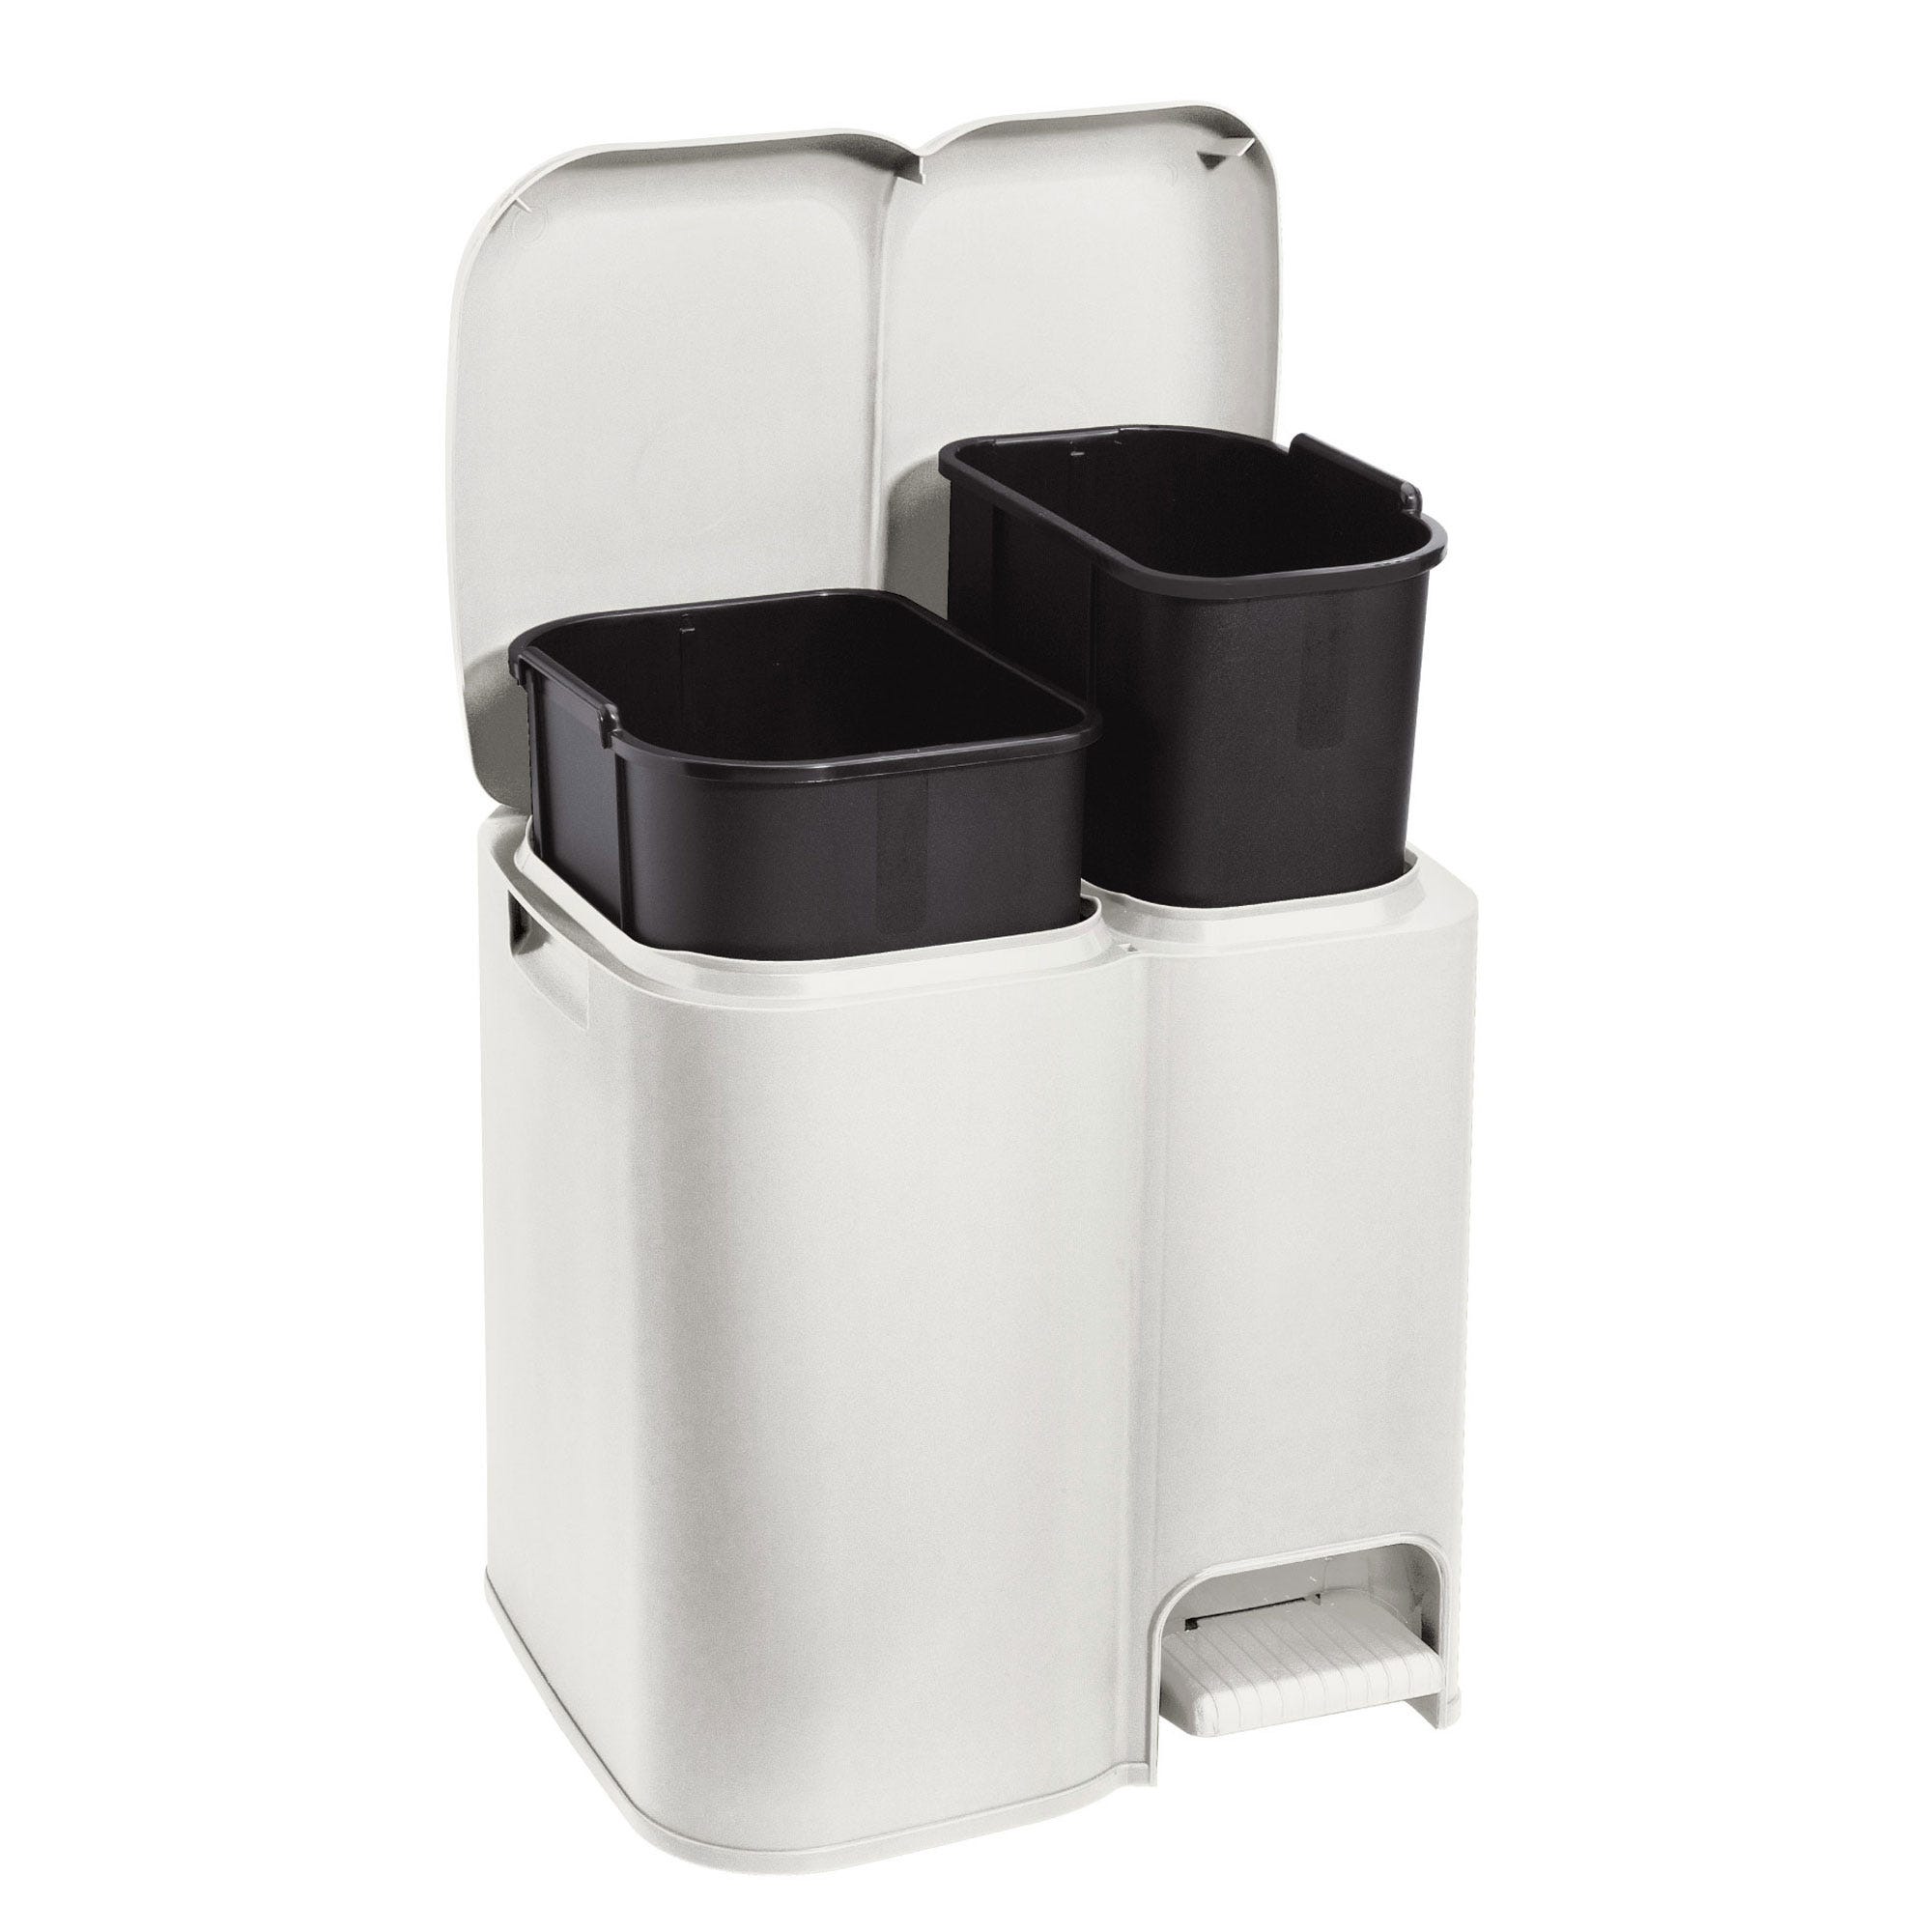 Cubo de basura doble de 2 compartimentos de 10 L cada uno en color plata  Songmics LTB40NL